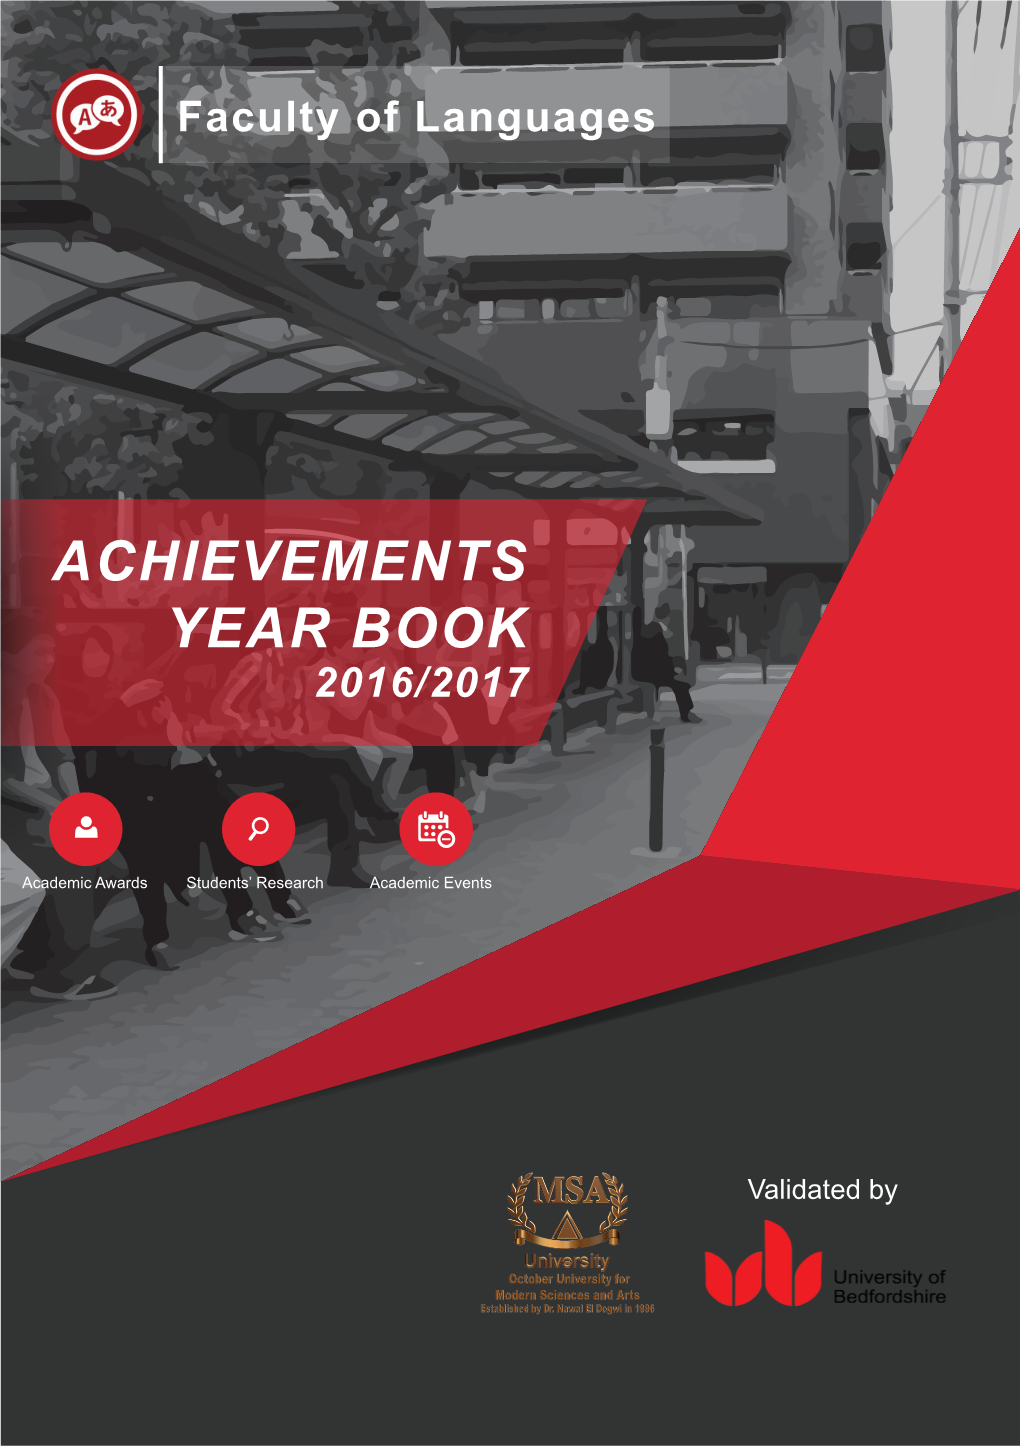 Download the Achievement Book 2016/2017